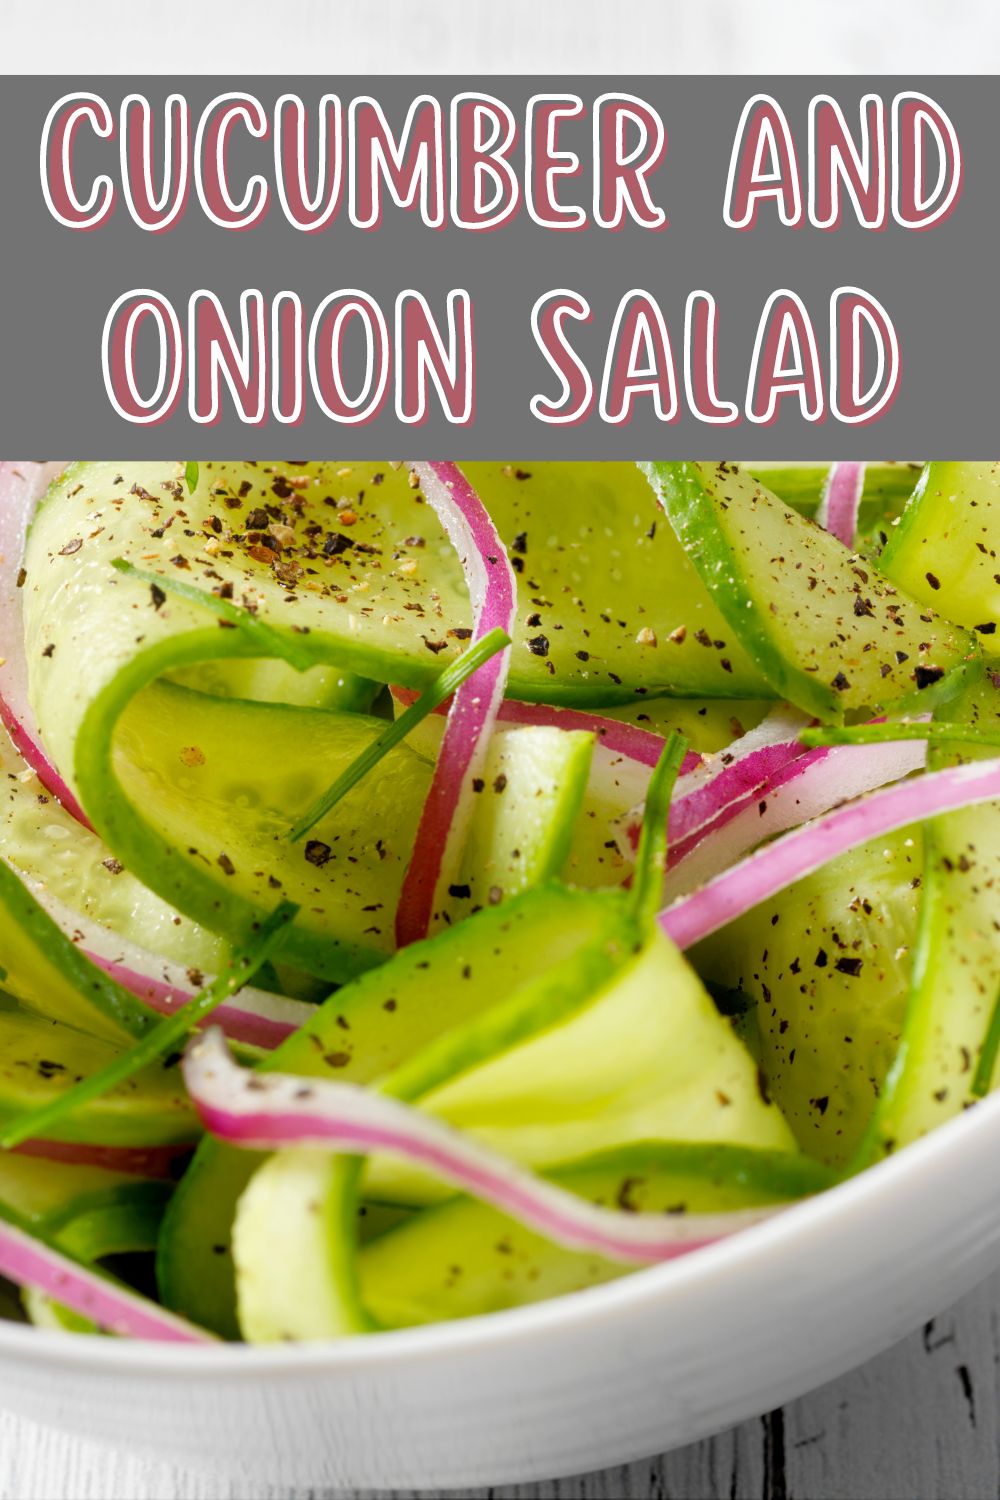 Cucumber and onion salad.